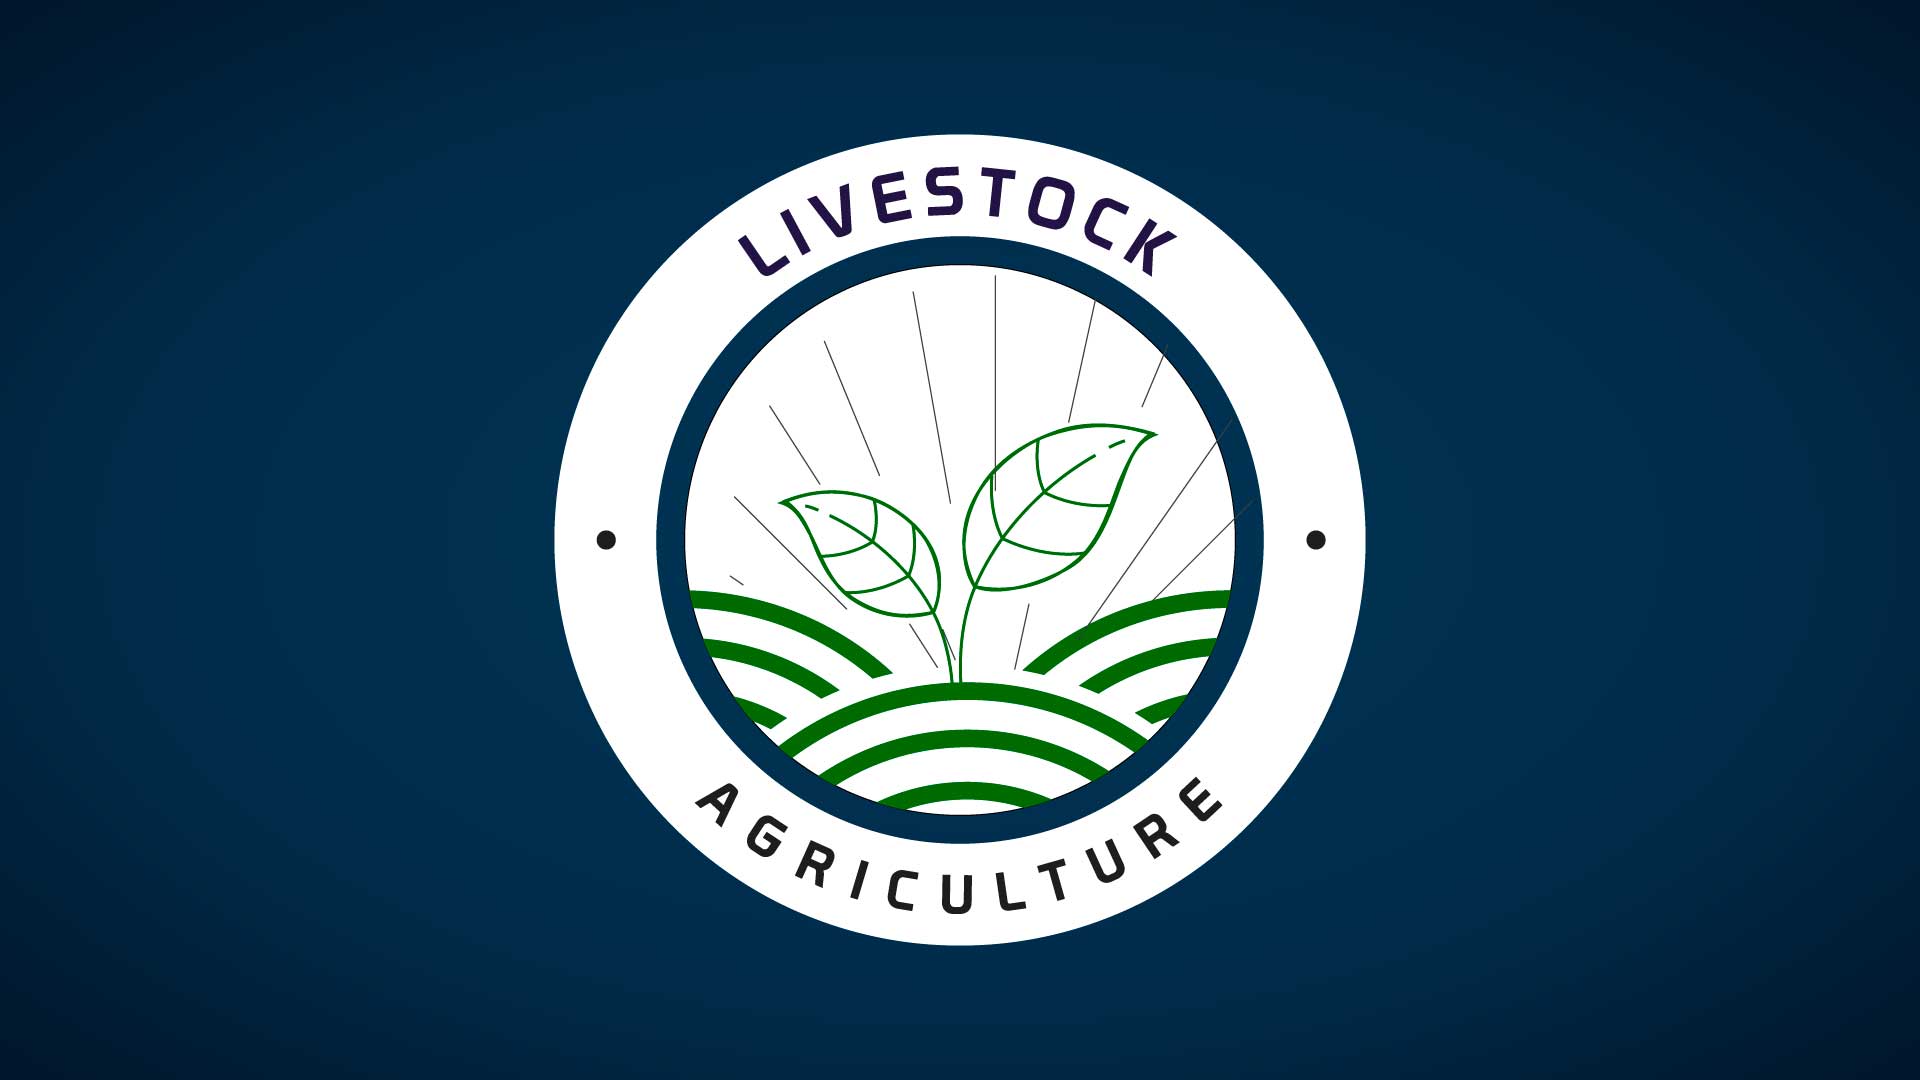 Agriculture & Livestock